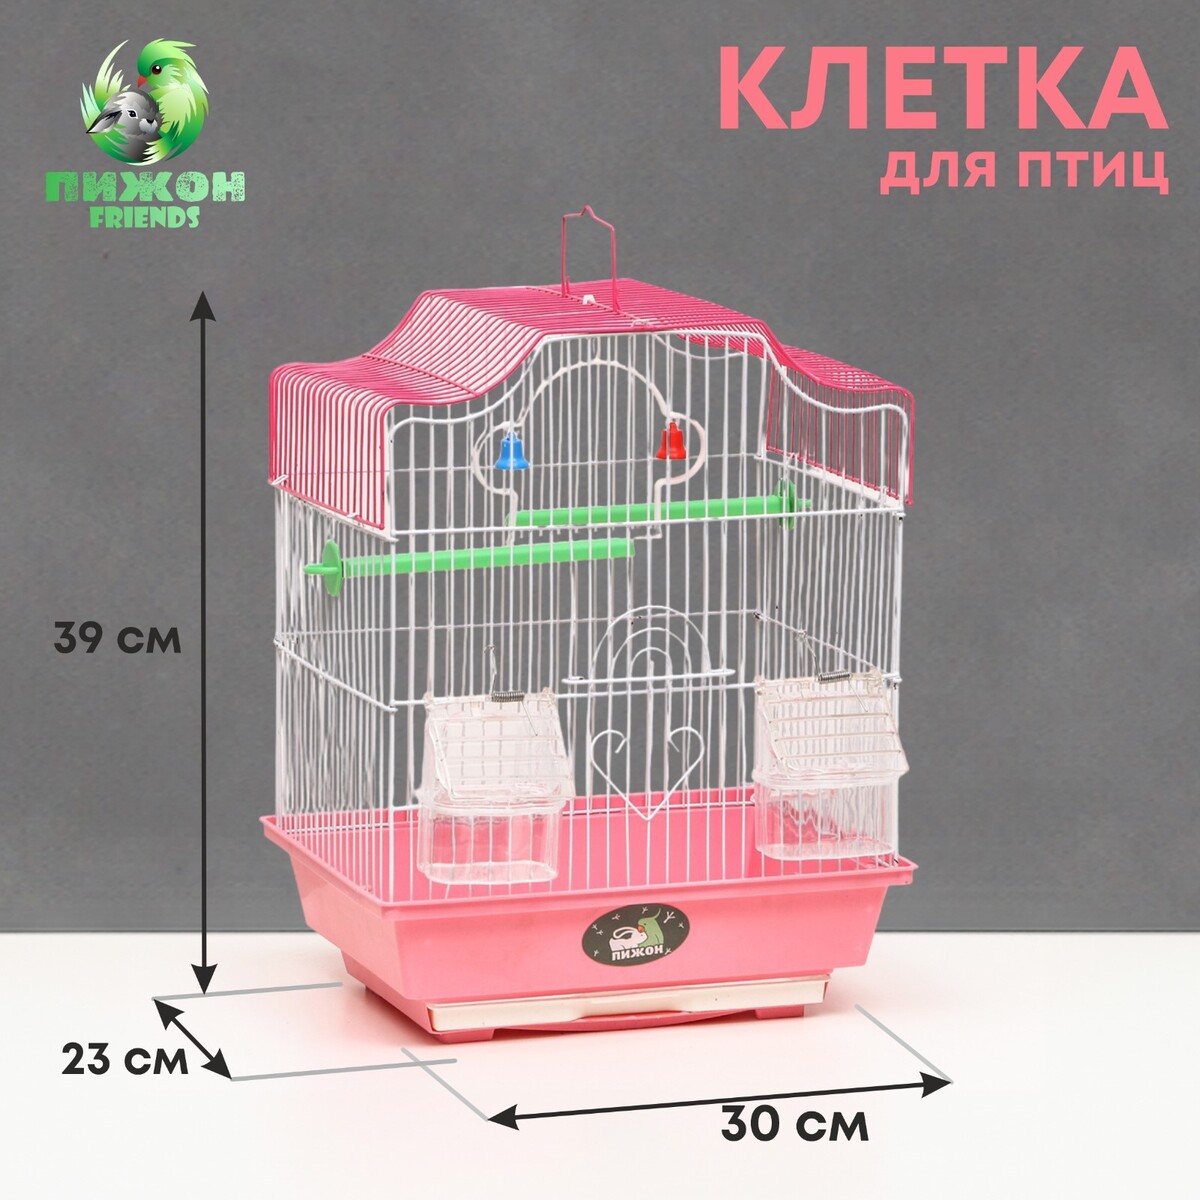 Клетка для птиц укомплектованная bd-1/4f, 30 х 23 х 39 см, розовая клетка для грызунов укомплектованная 23 х 19 х 28 см розовая